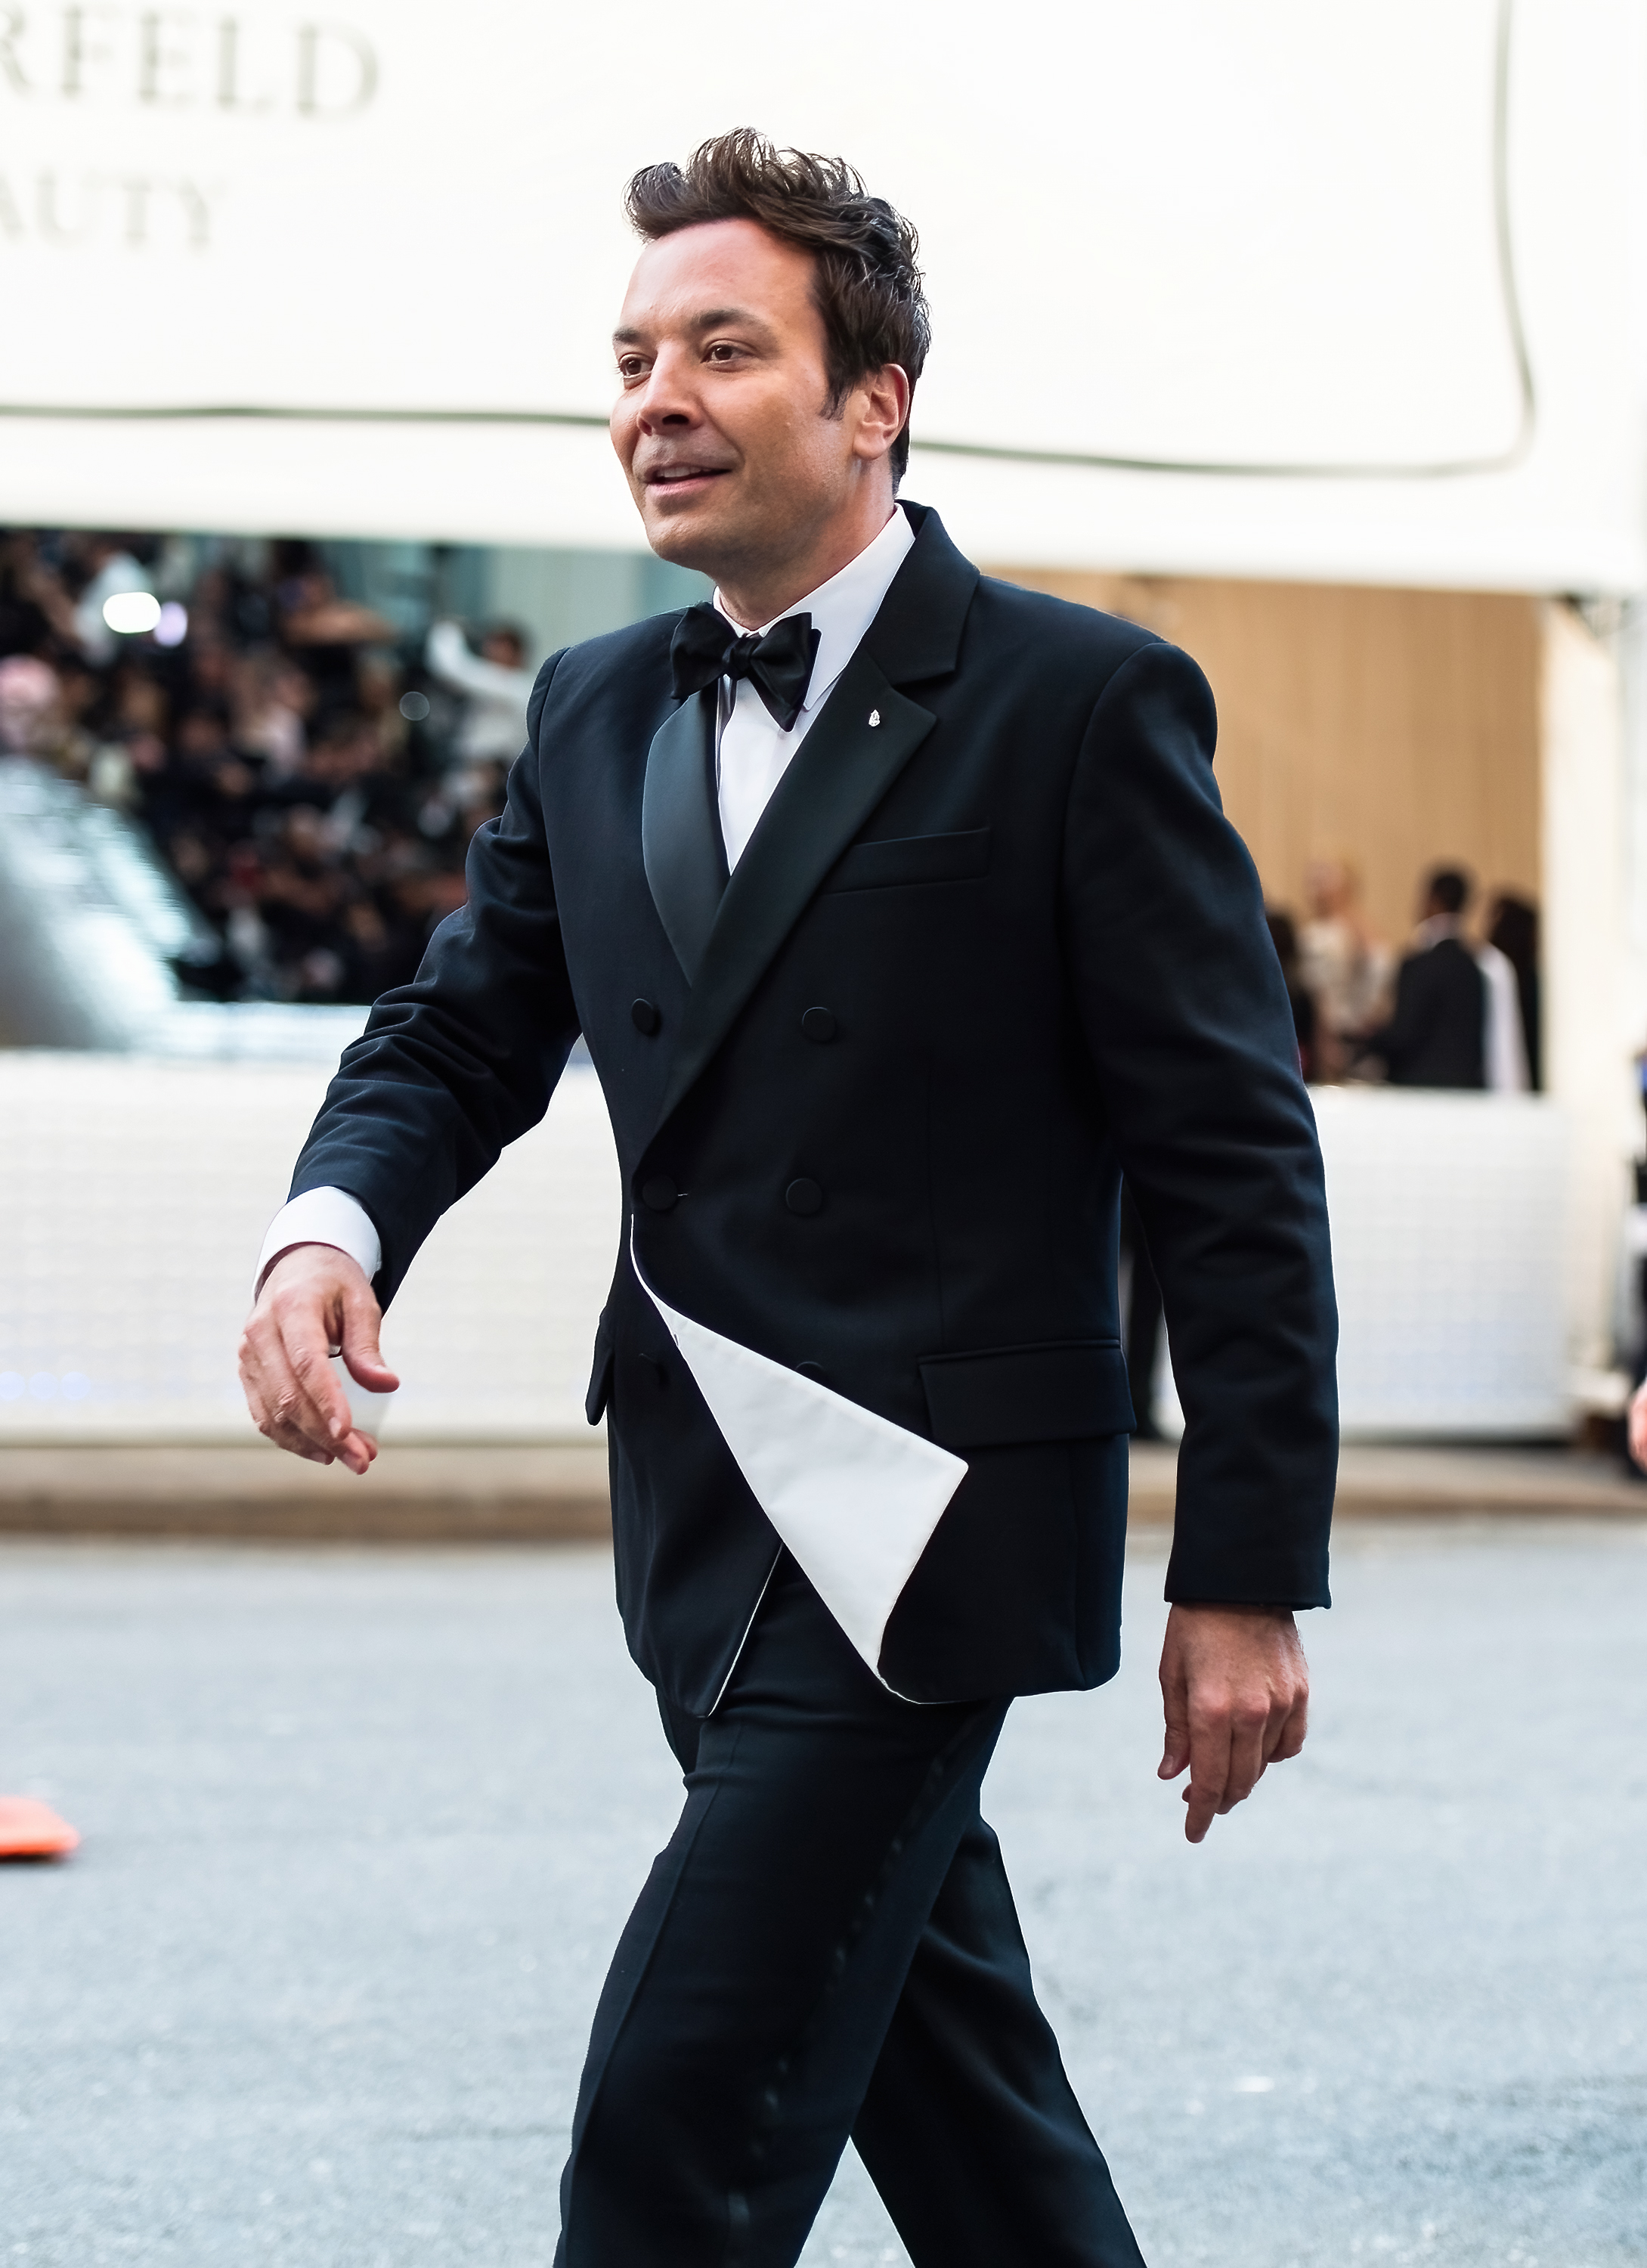 Jimmy Fallon in a black suit and bow tie walking on a sidewalk